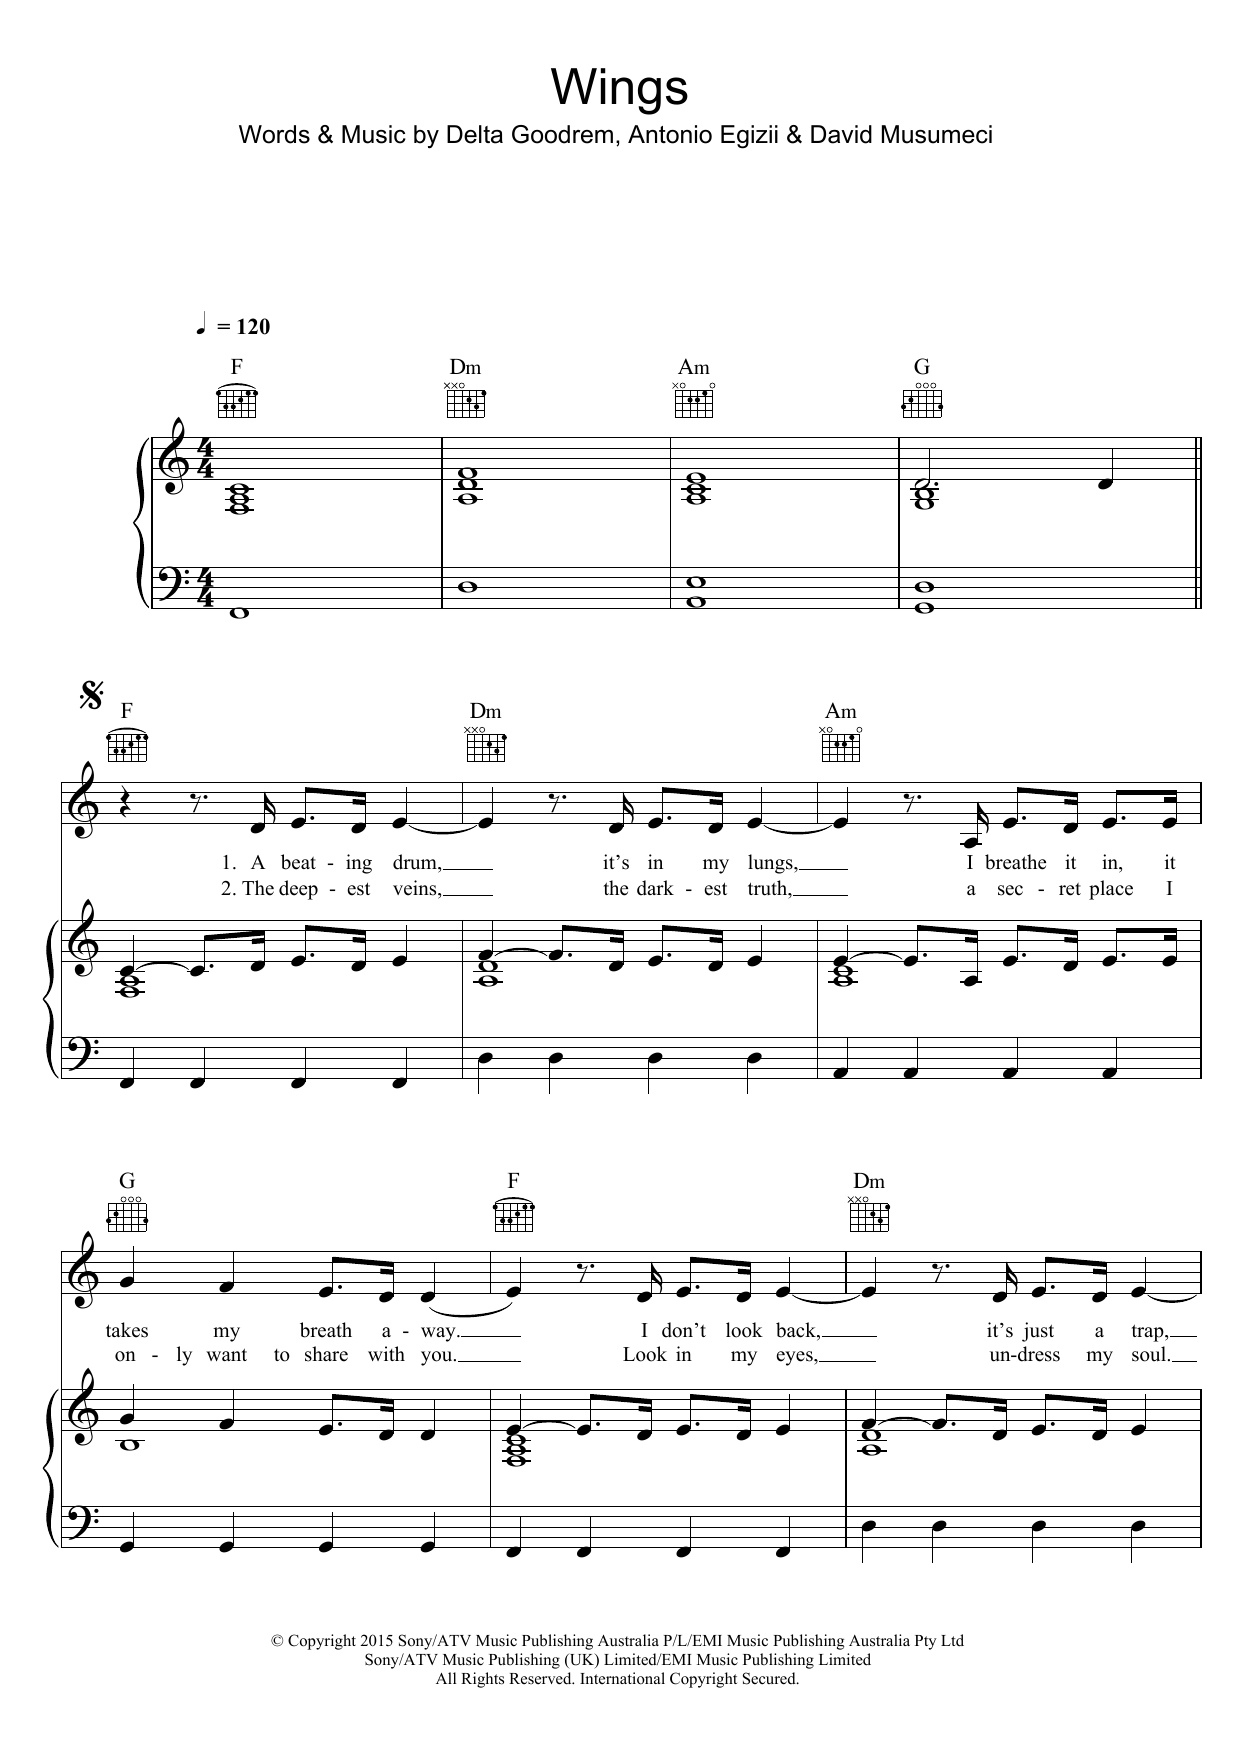 Delta Goodrem Wings Sheet Music Notes & Chords for Melody Line, Lyrics & Chords - Download or Print PDF